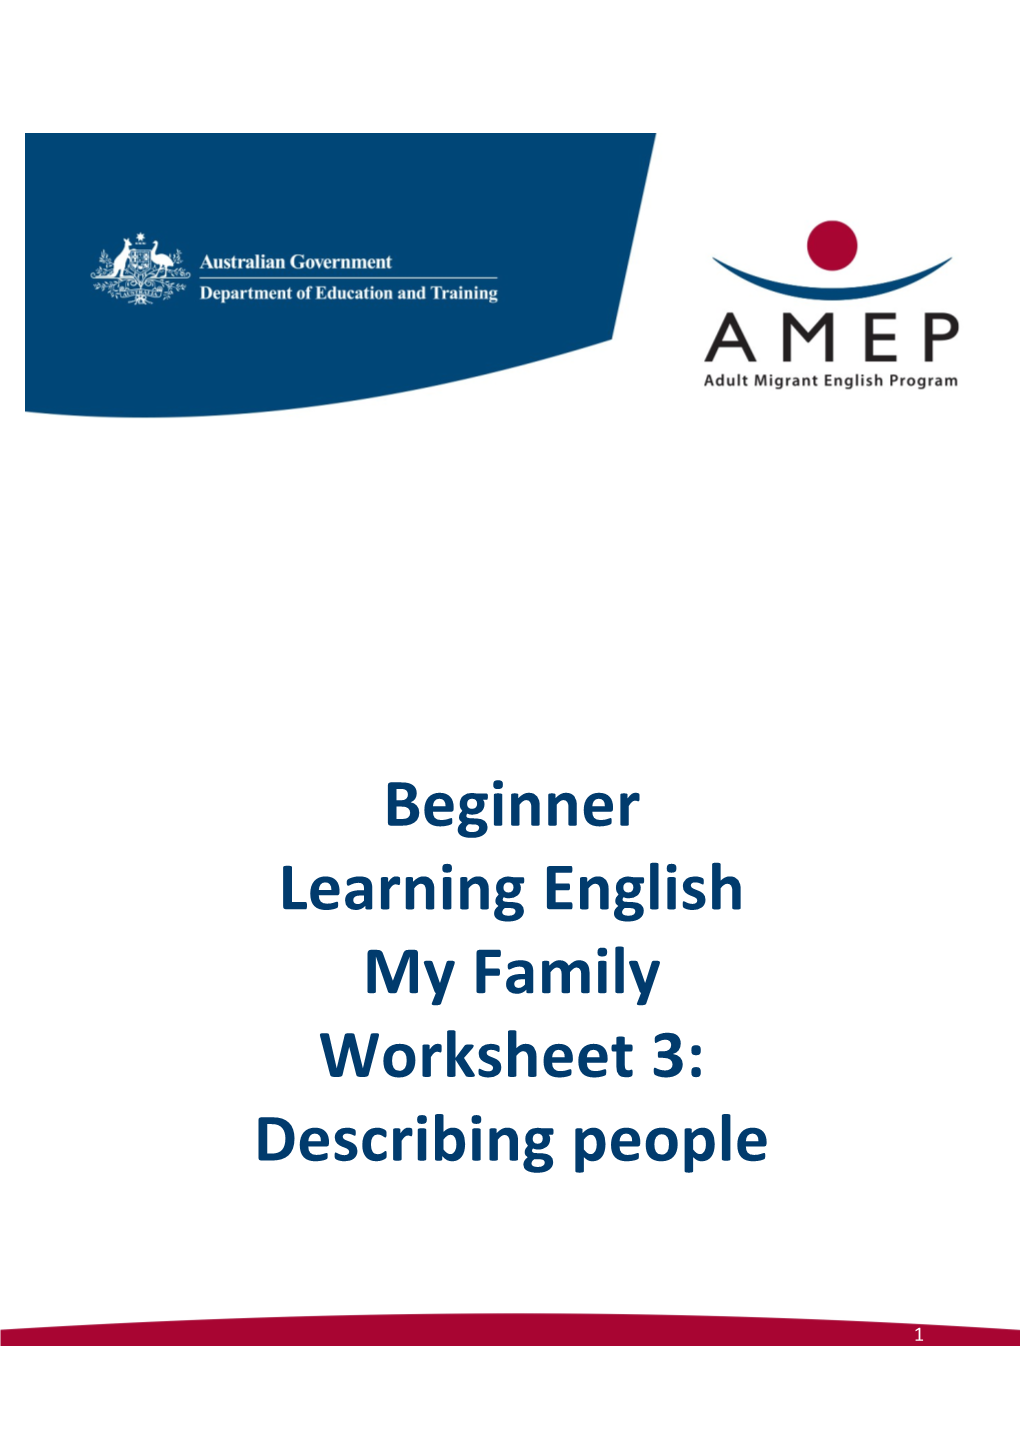 Beginner Learning English My Family Worksheet 3: Describing People